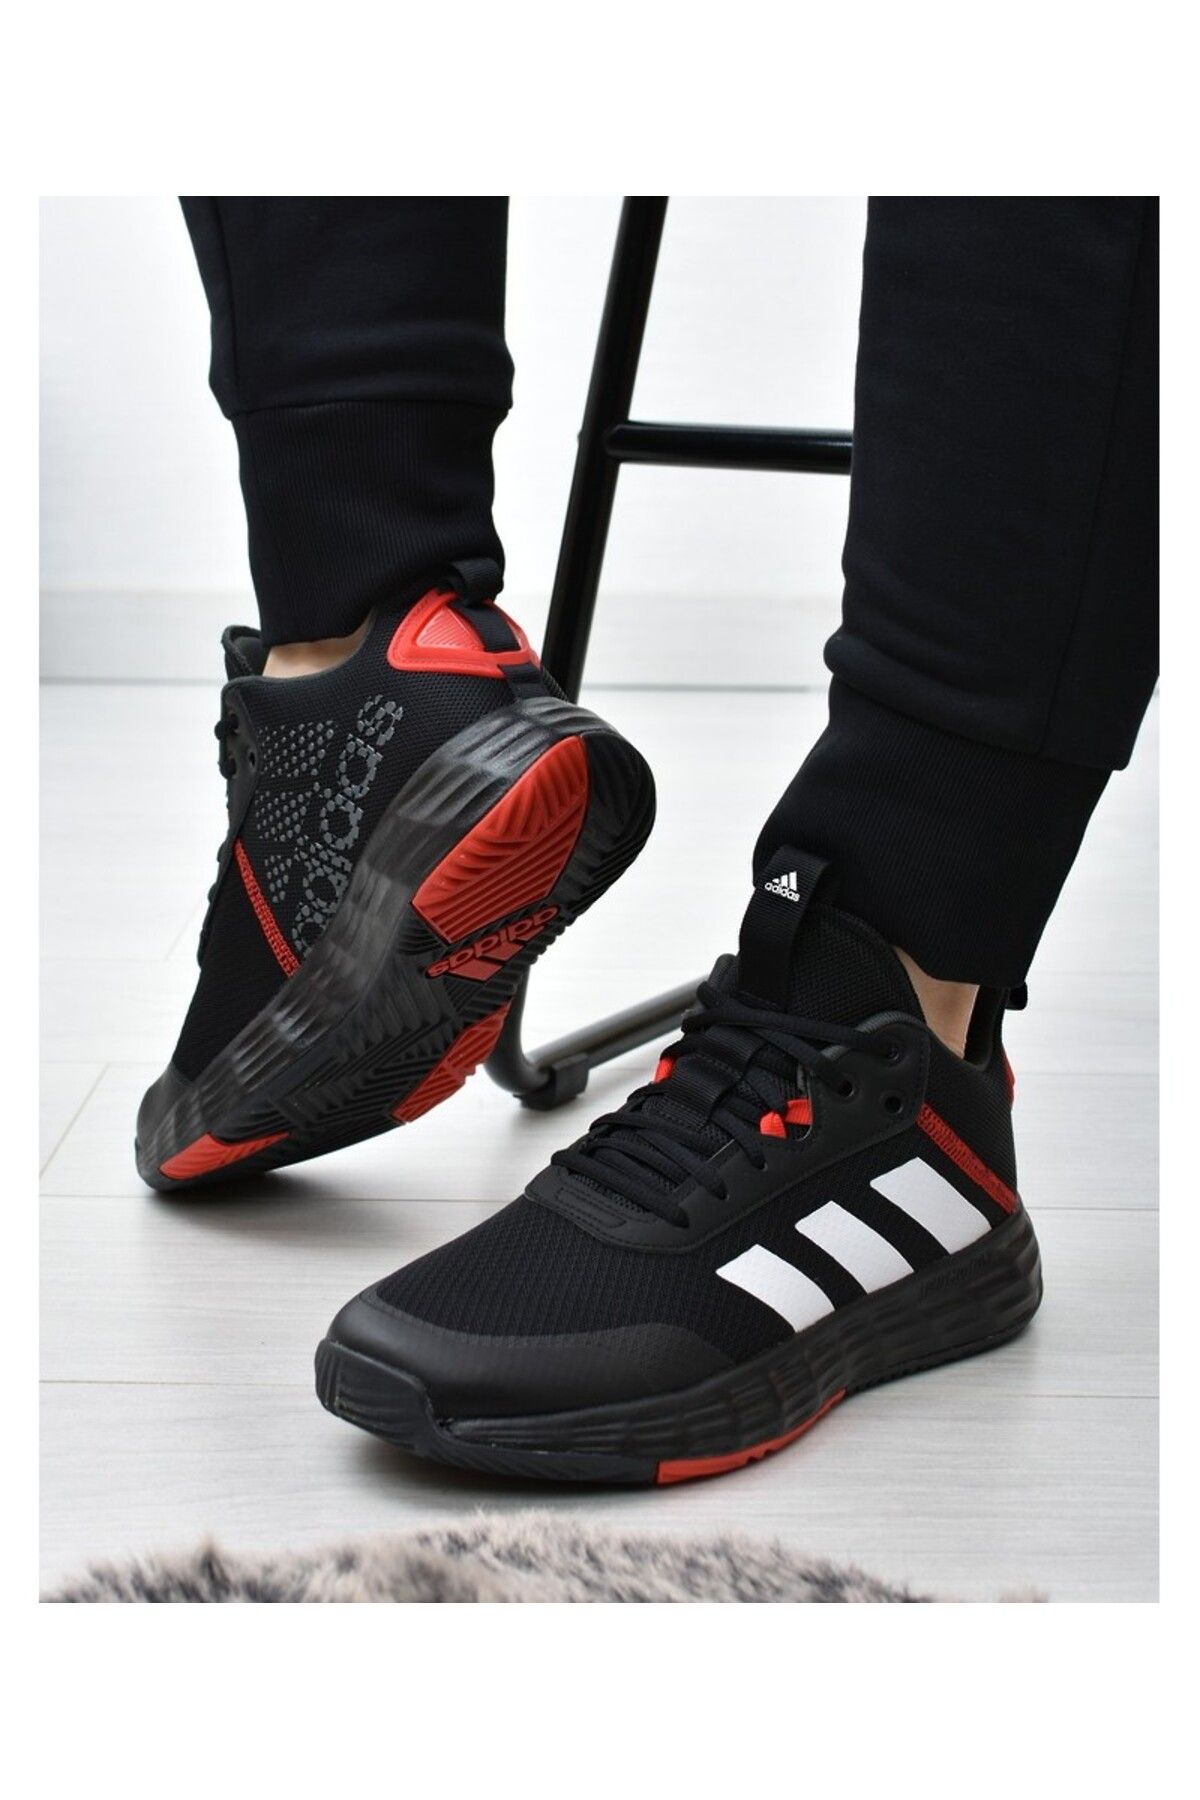 adidas Ownthegame 2.0 Erkek Basketbol Ayakkabısı -Siyah